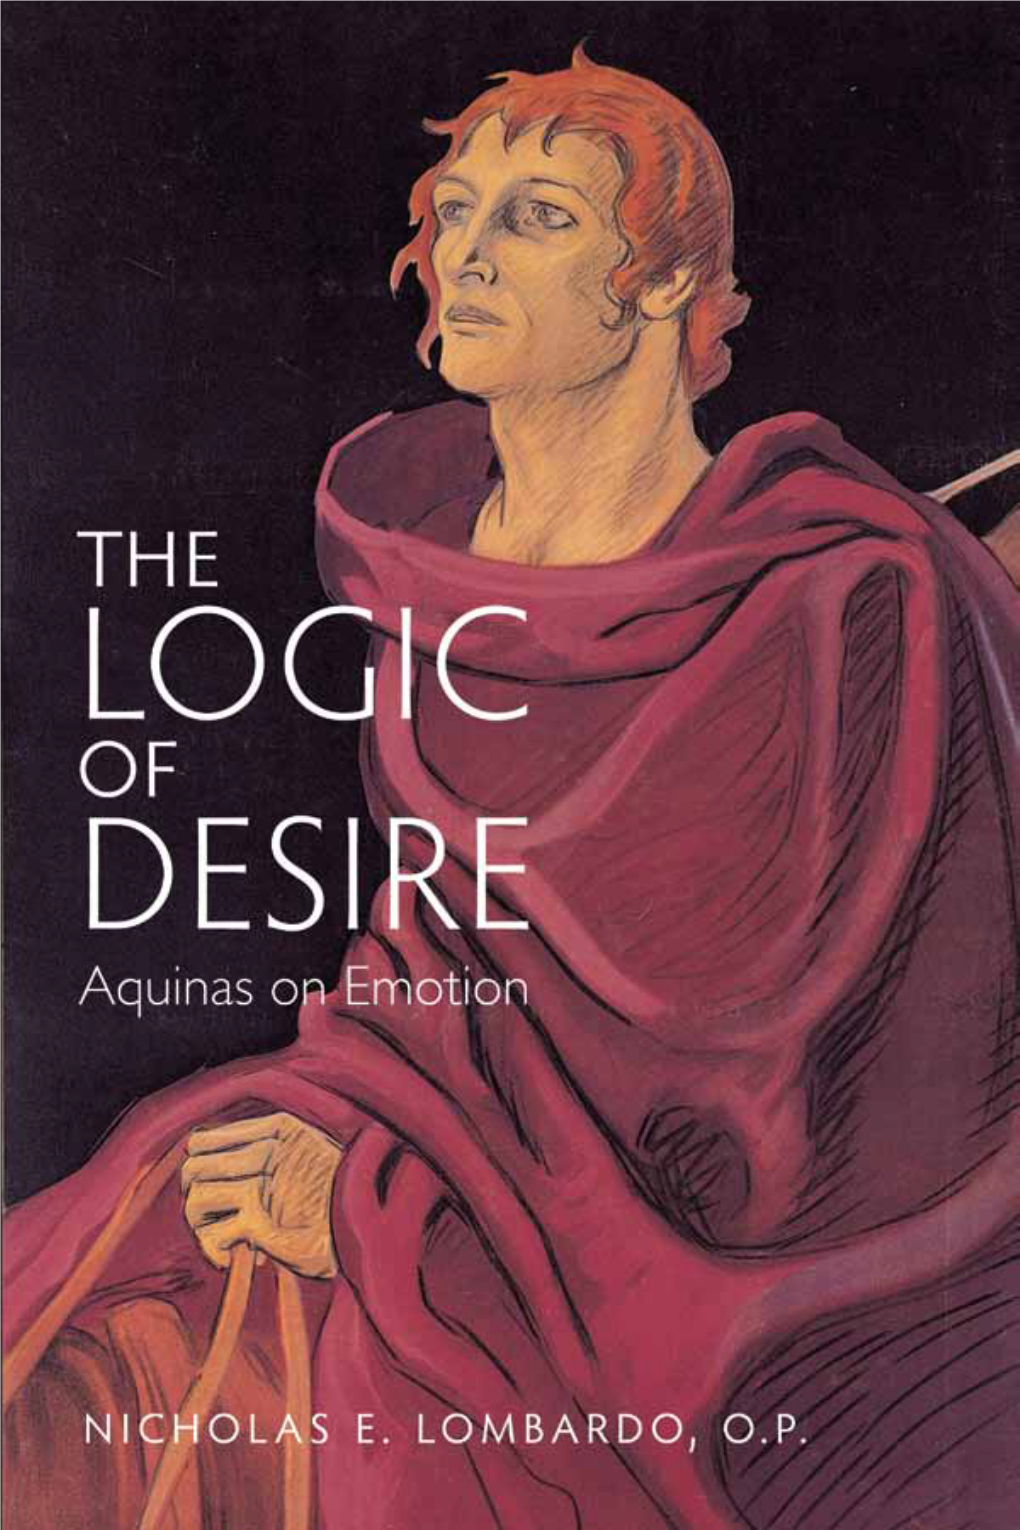 The Logic of Desire: Aquinas on Emotion Was Designed and Typeset in Meta Serif with Meta Display Type by Kachergis Book Design of Pittsboro, North Carolina